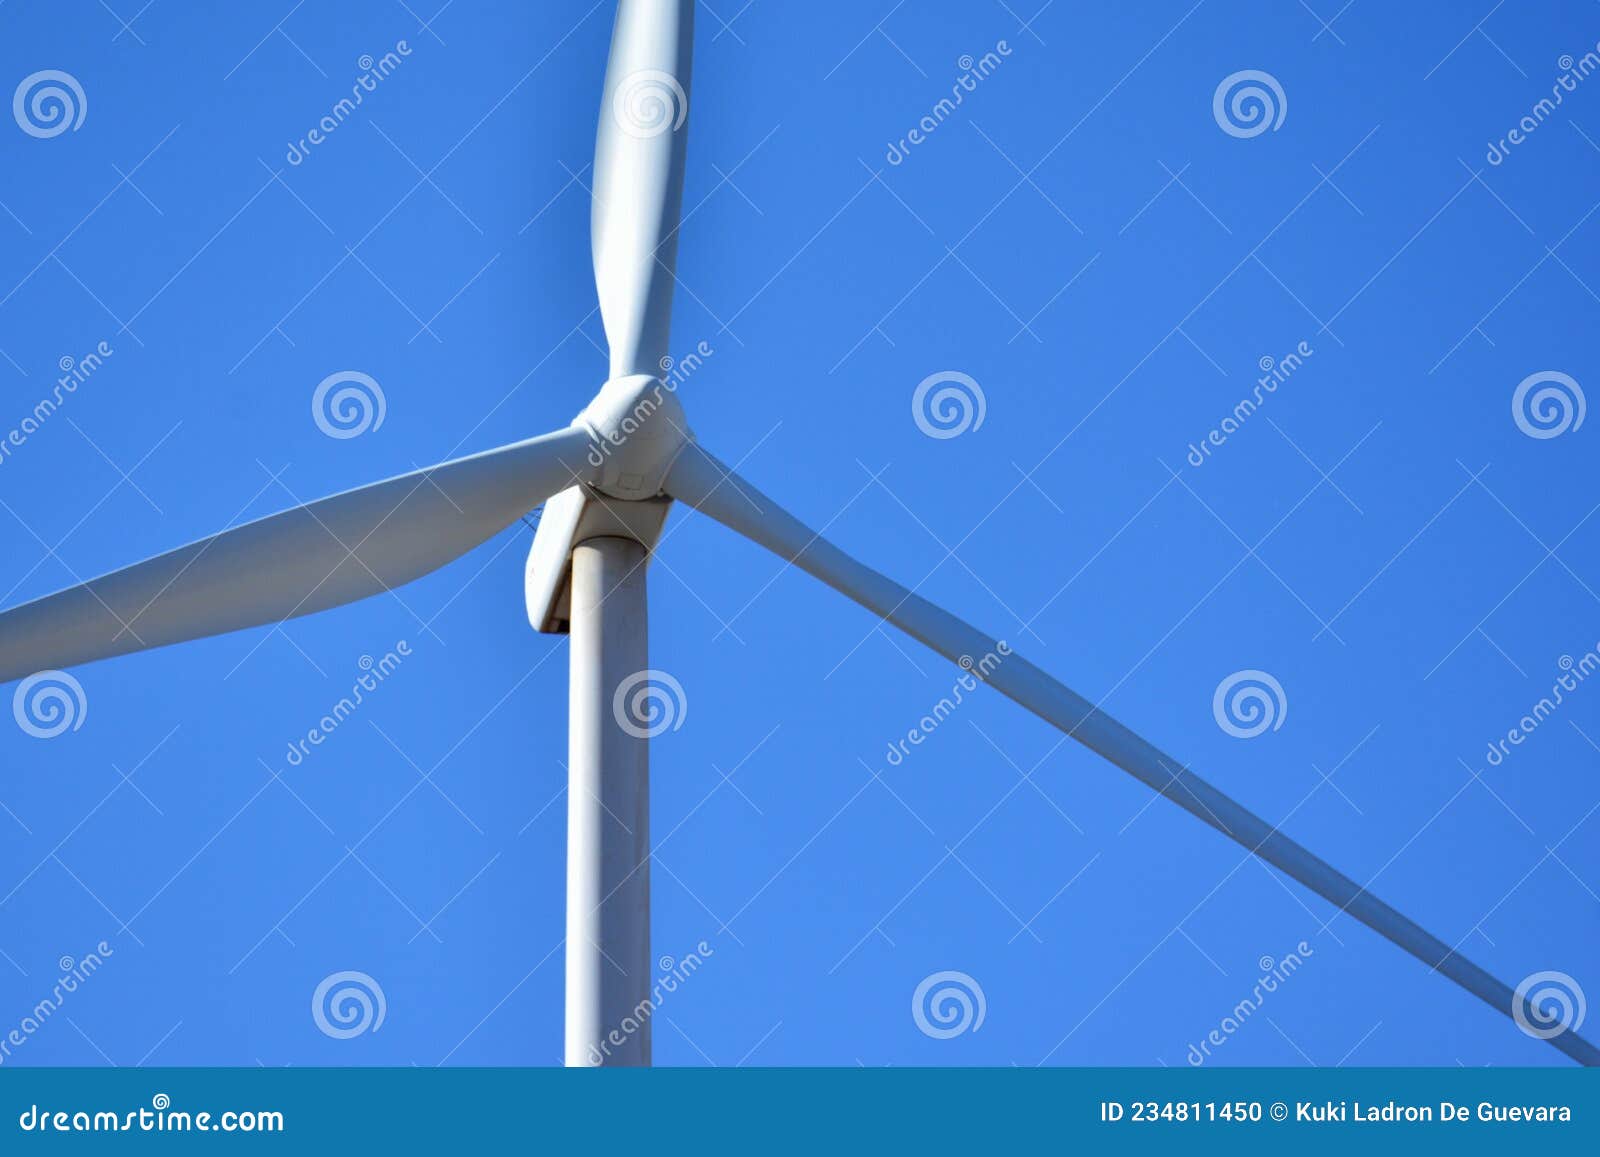 wind turbines producing energy